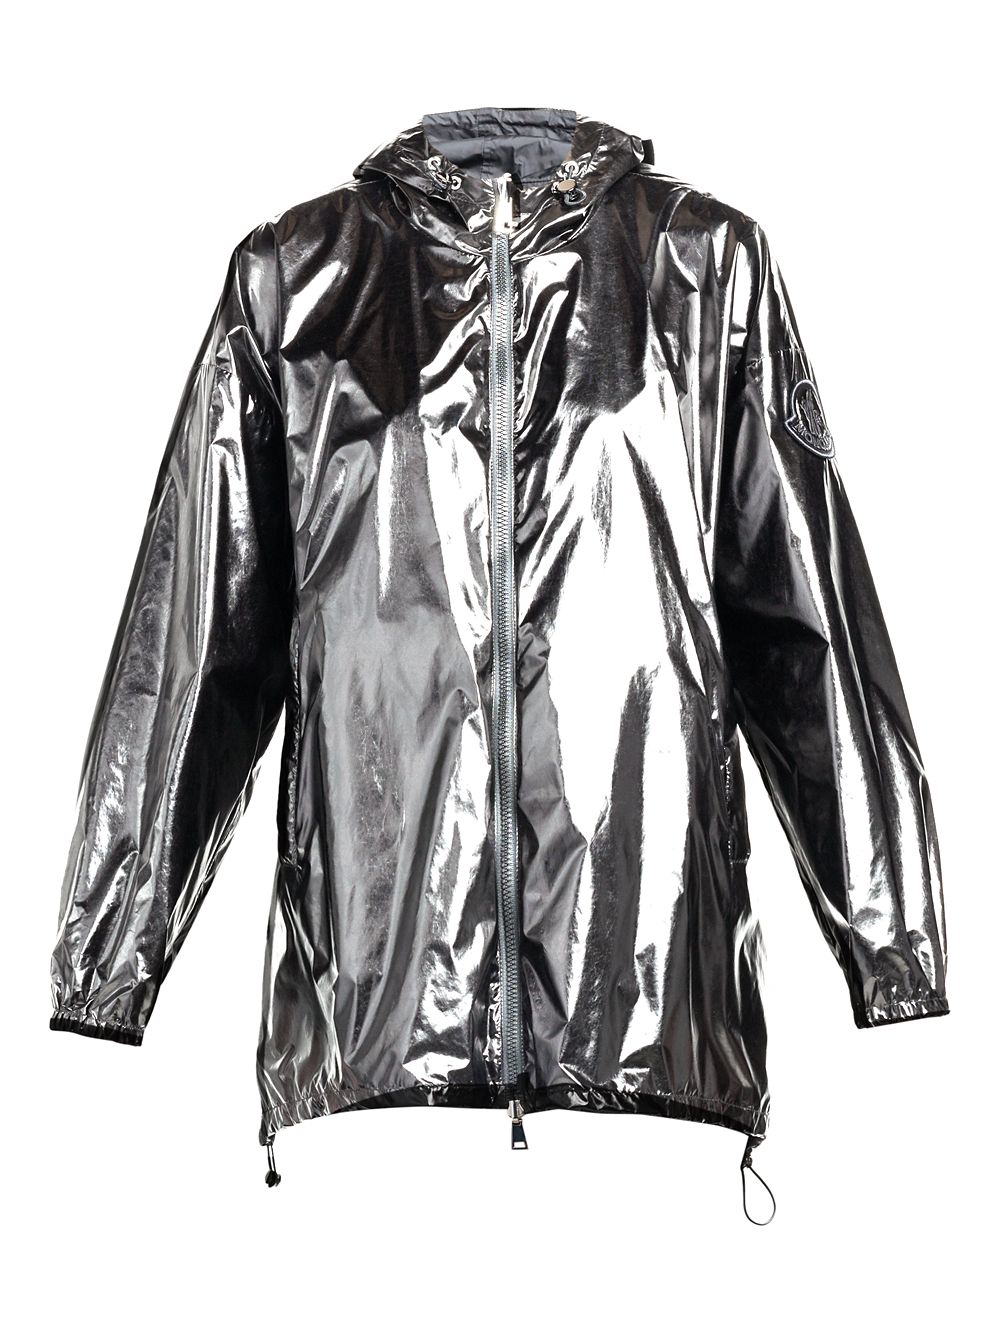 Archivio Creativo Jubba Куртка с капюшоном Moncler, серебряный